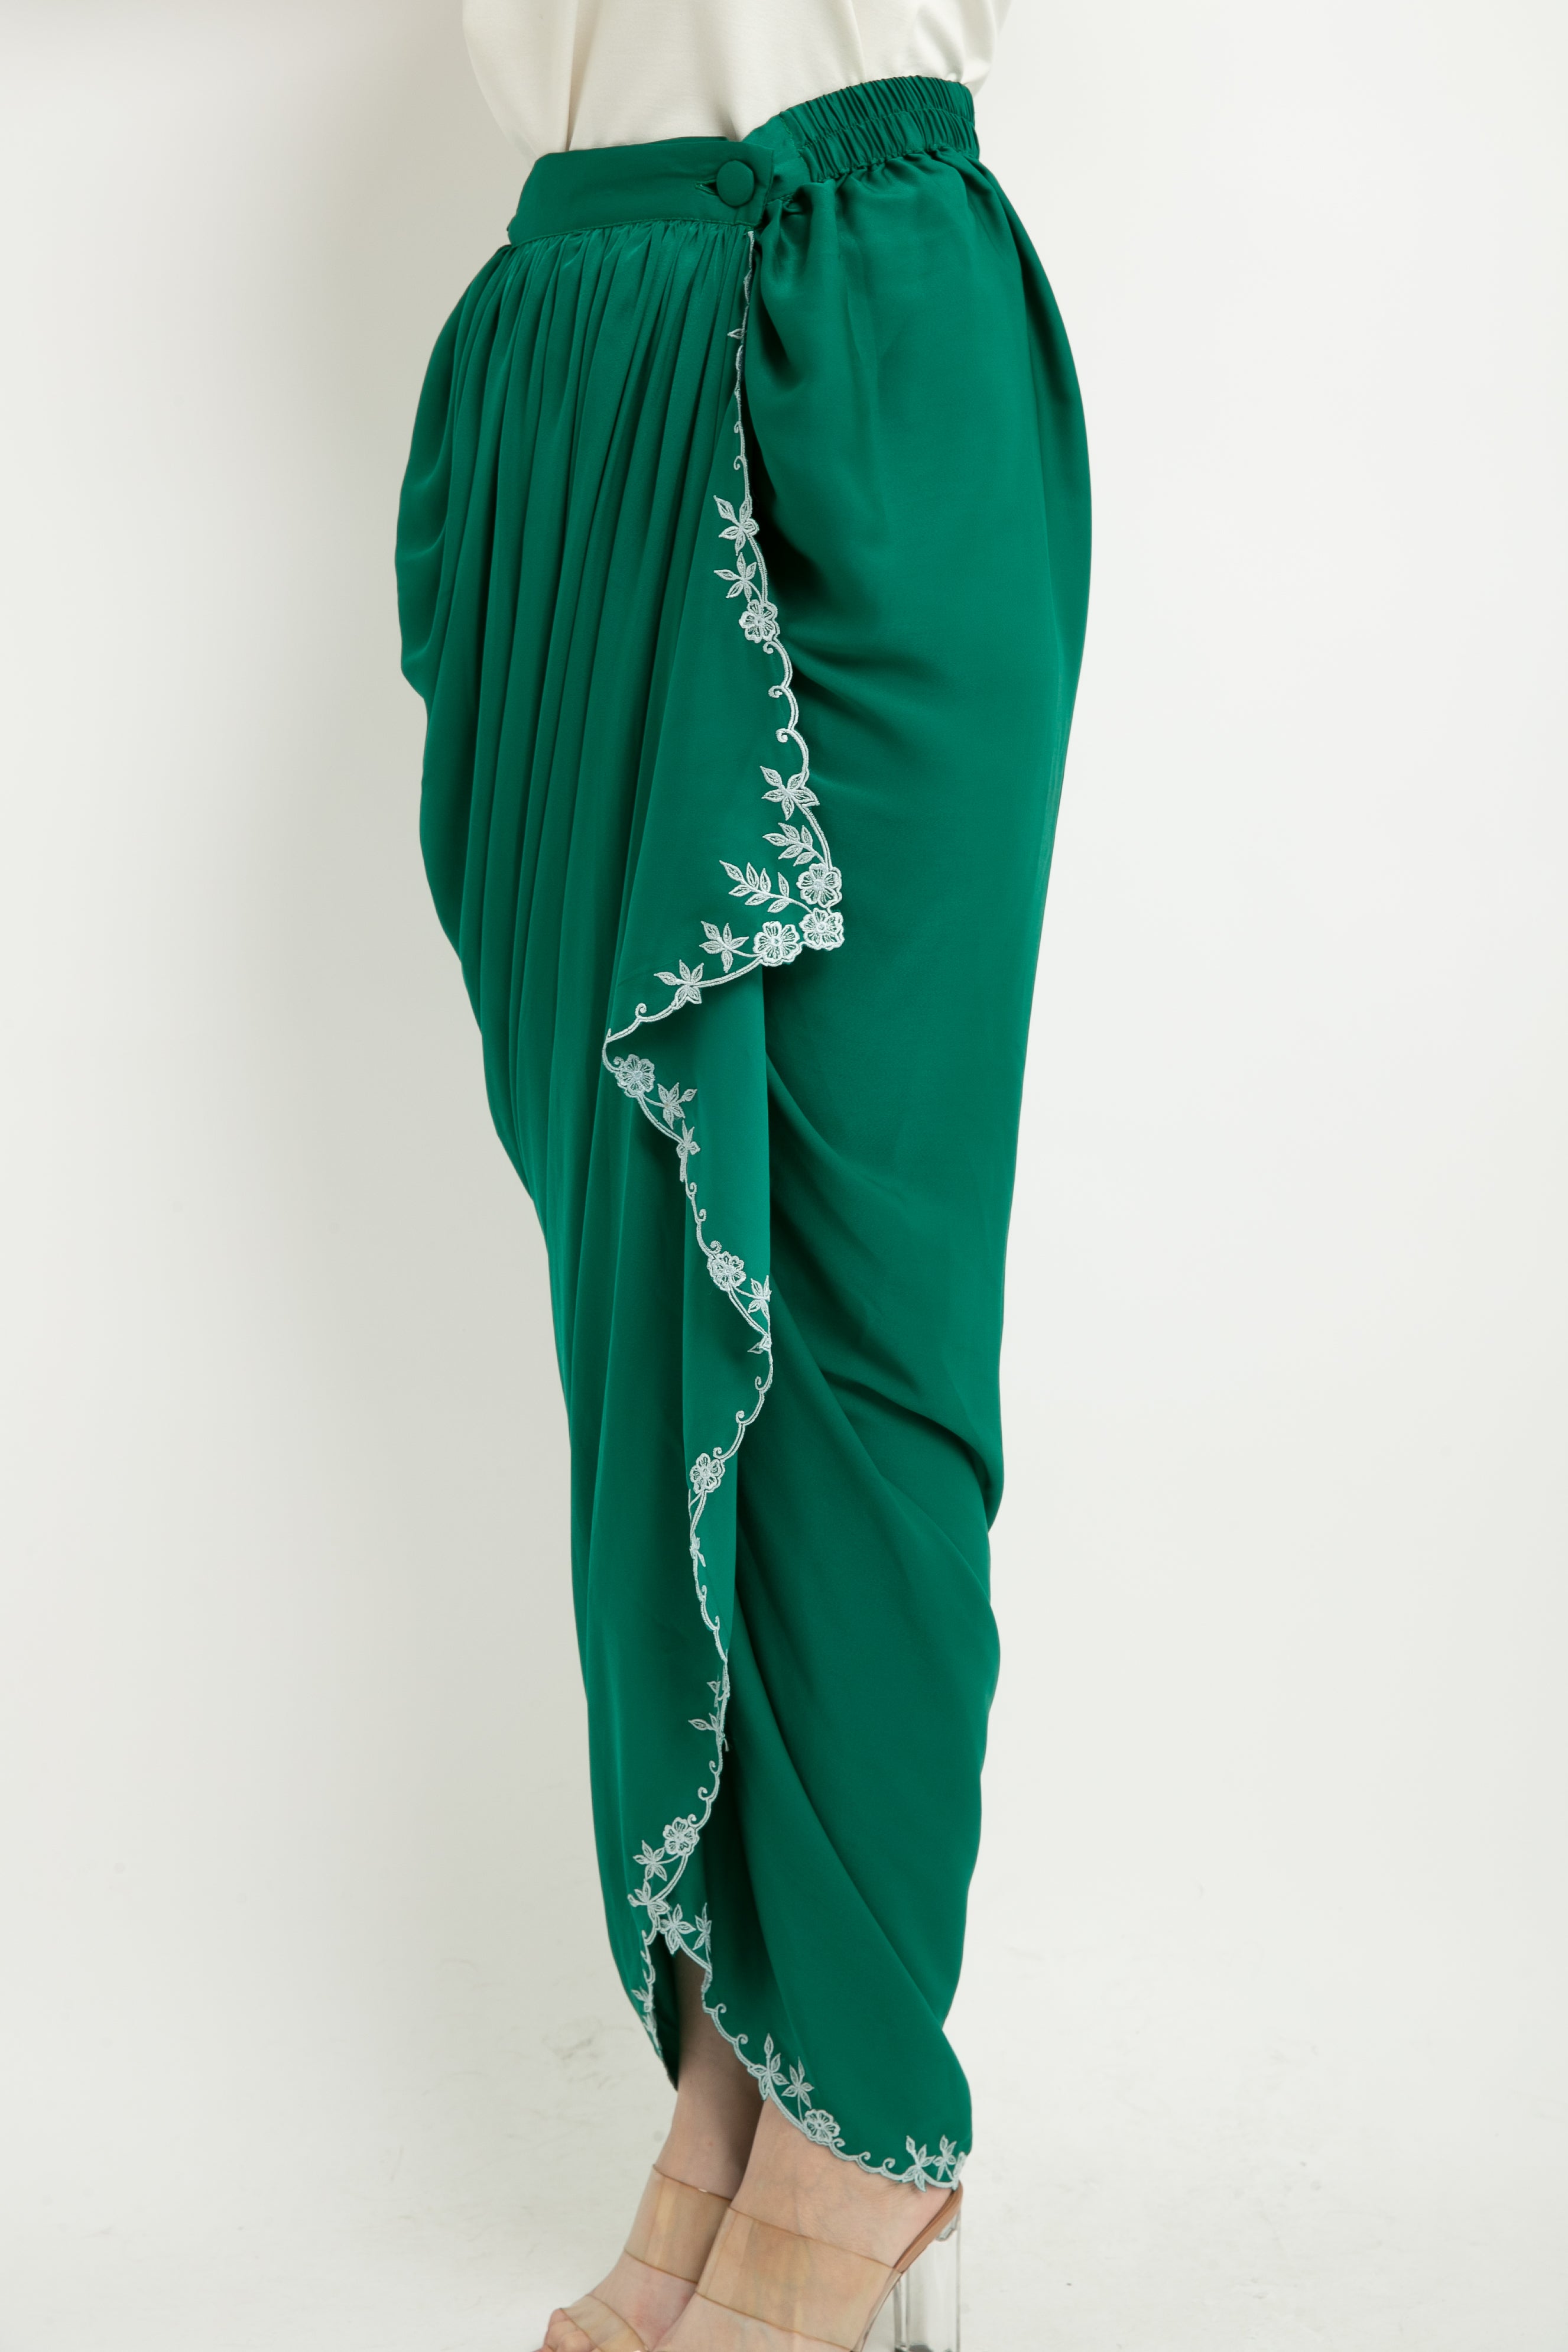 Rana Skirt in Emerald